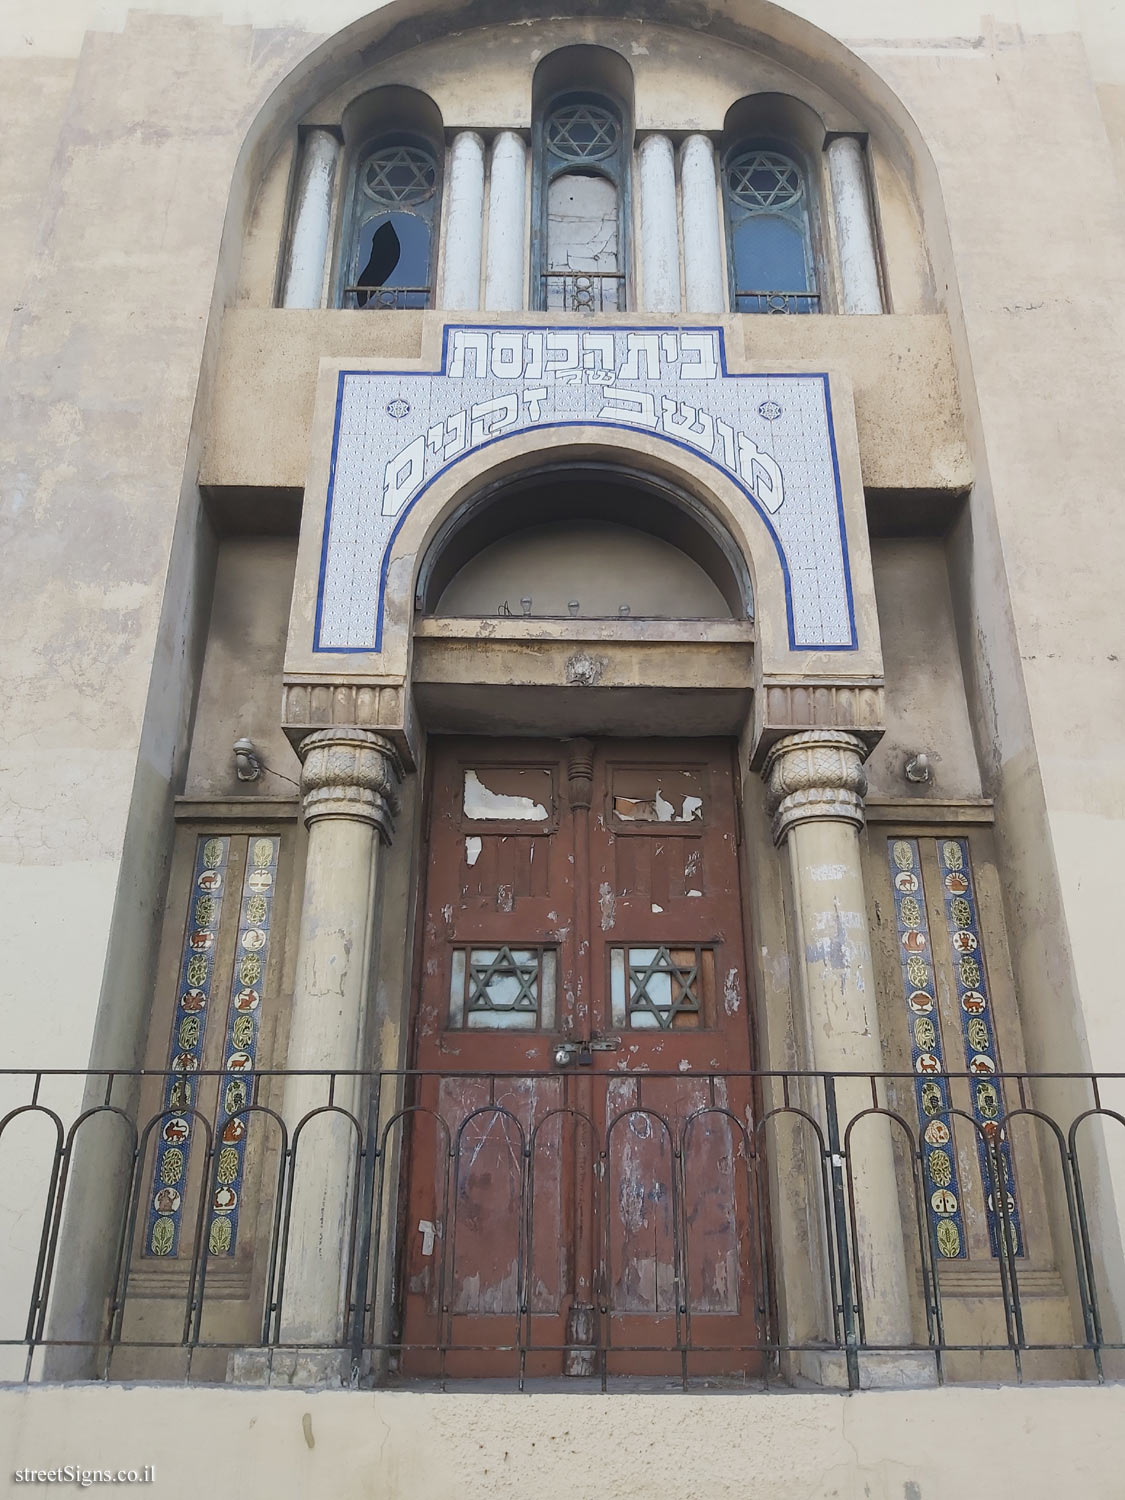 Tel Aviv - buildings for conservation - Moshav Zkenim Synagogue - Allenby 89